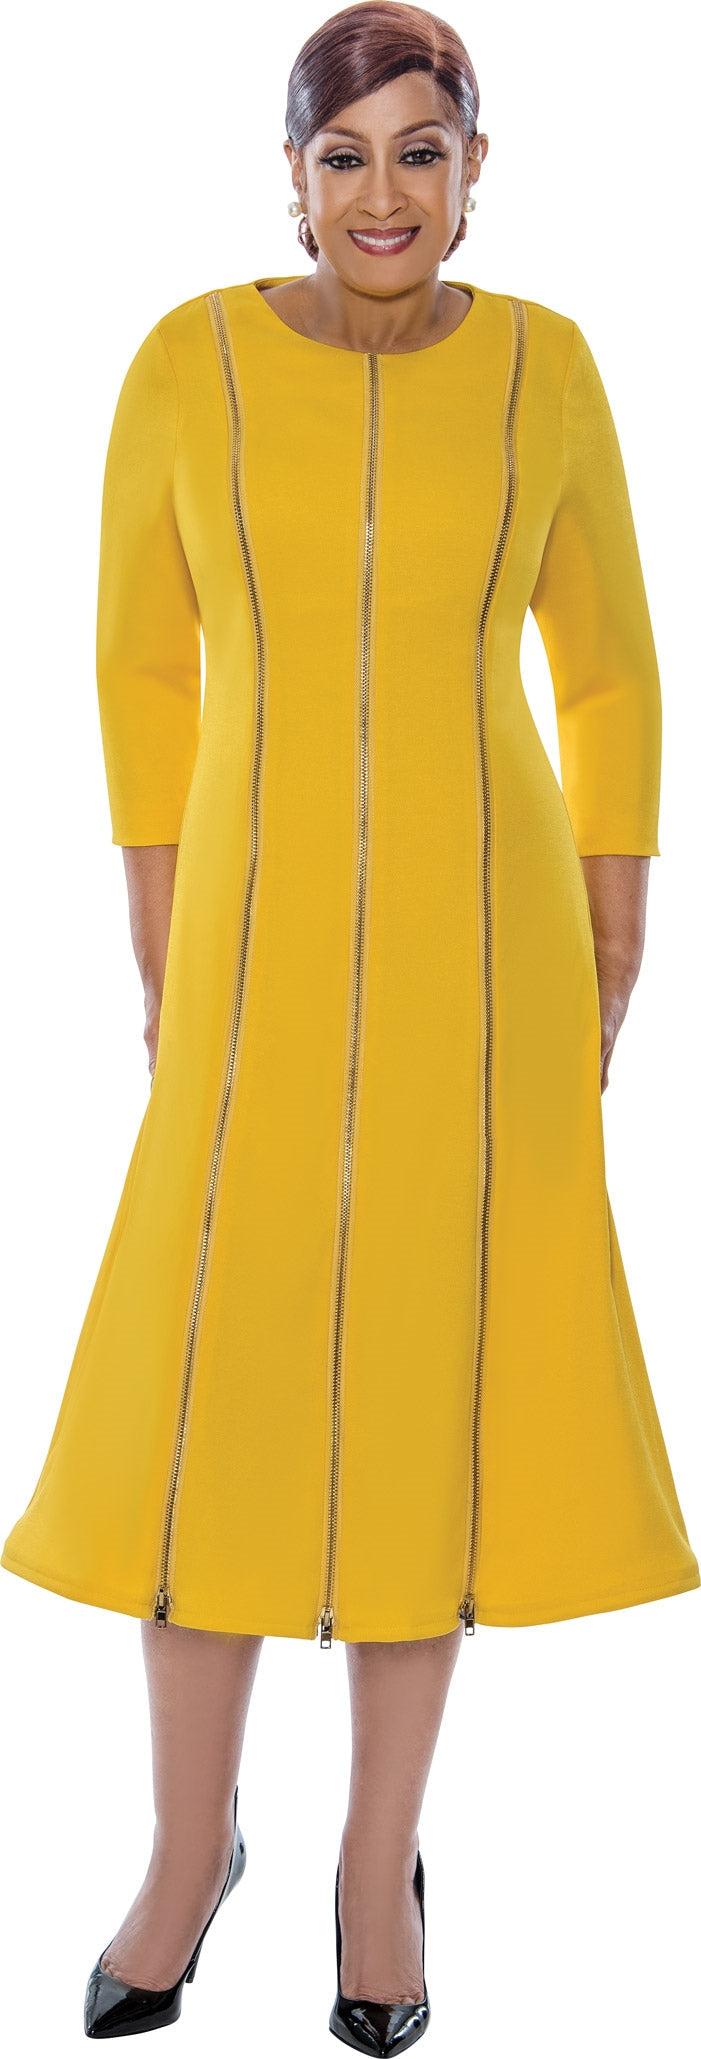 Dorinda Clark Cole Dress 4961 - Church Suits For Less